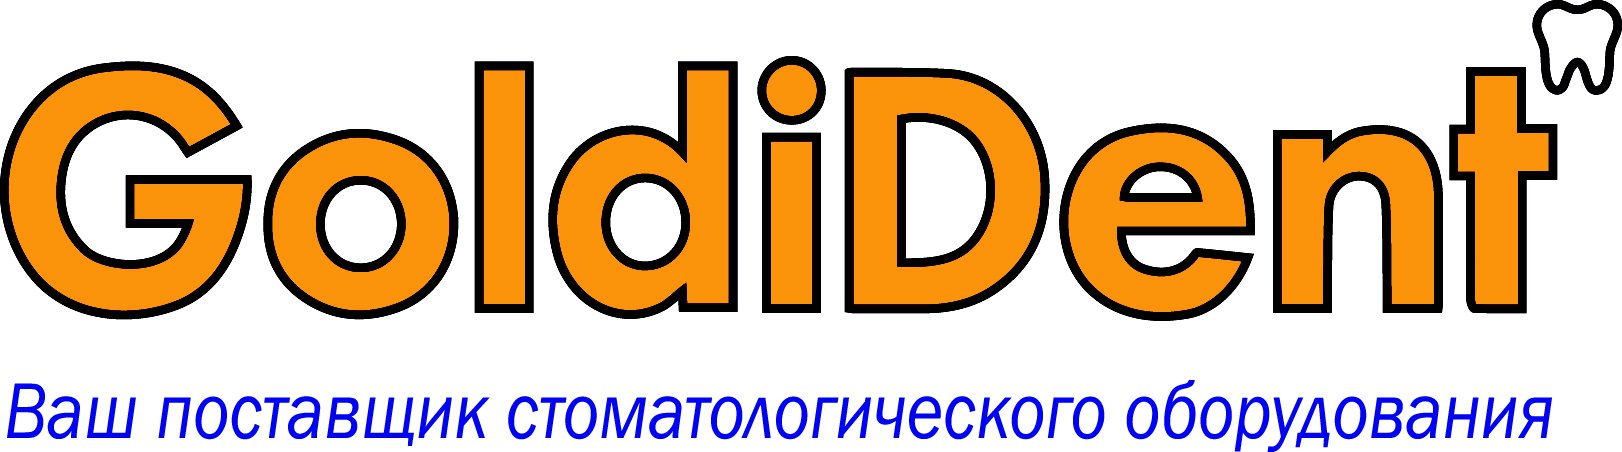 GoldiDent_logo.jpg